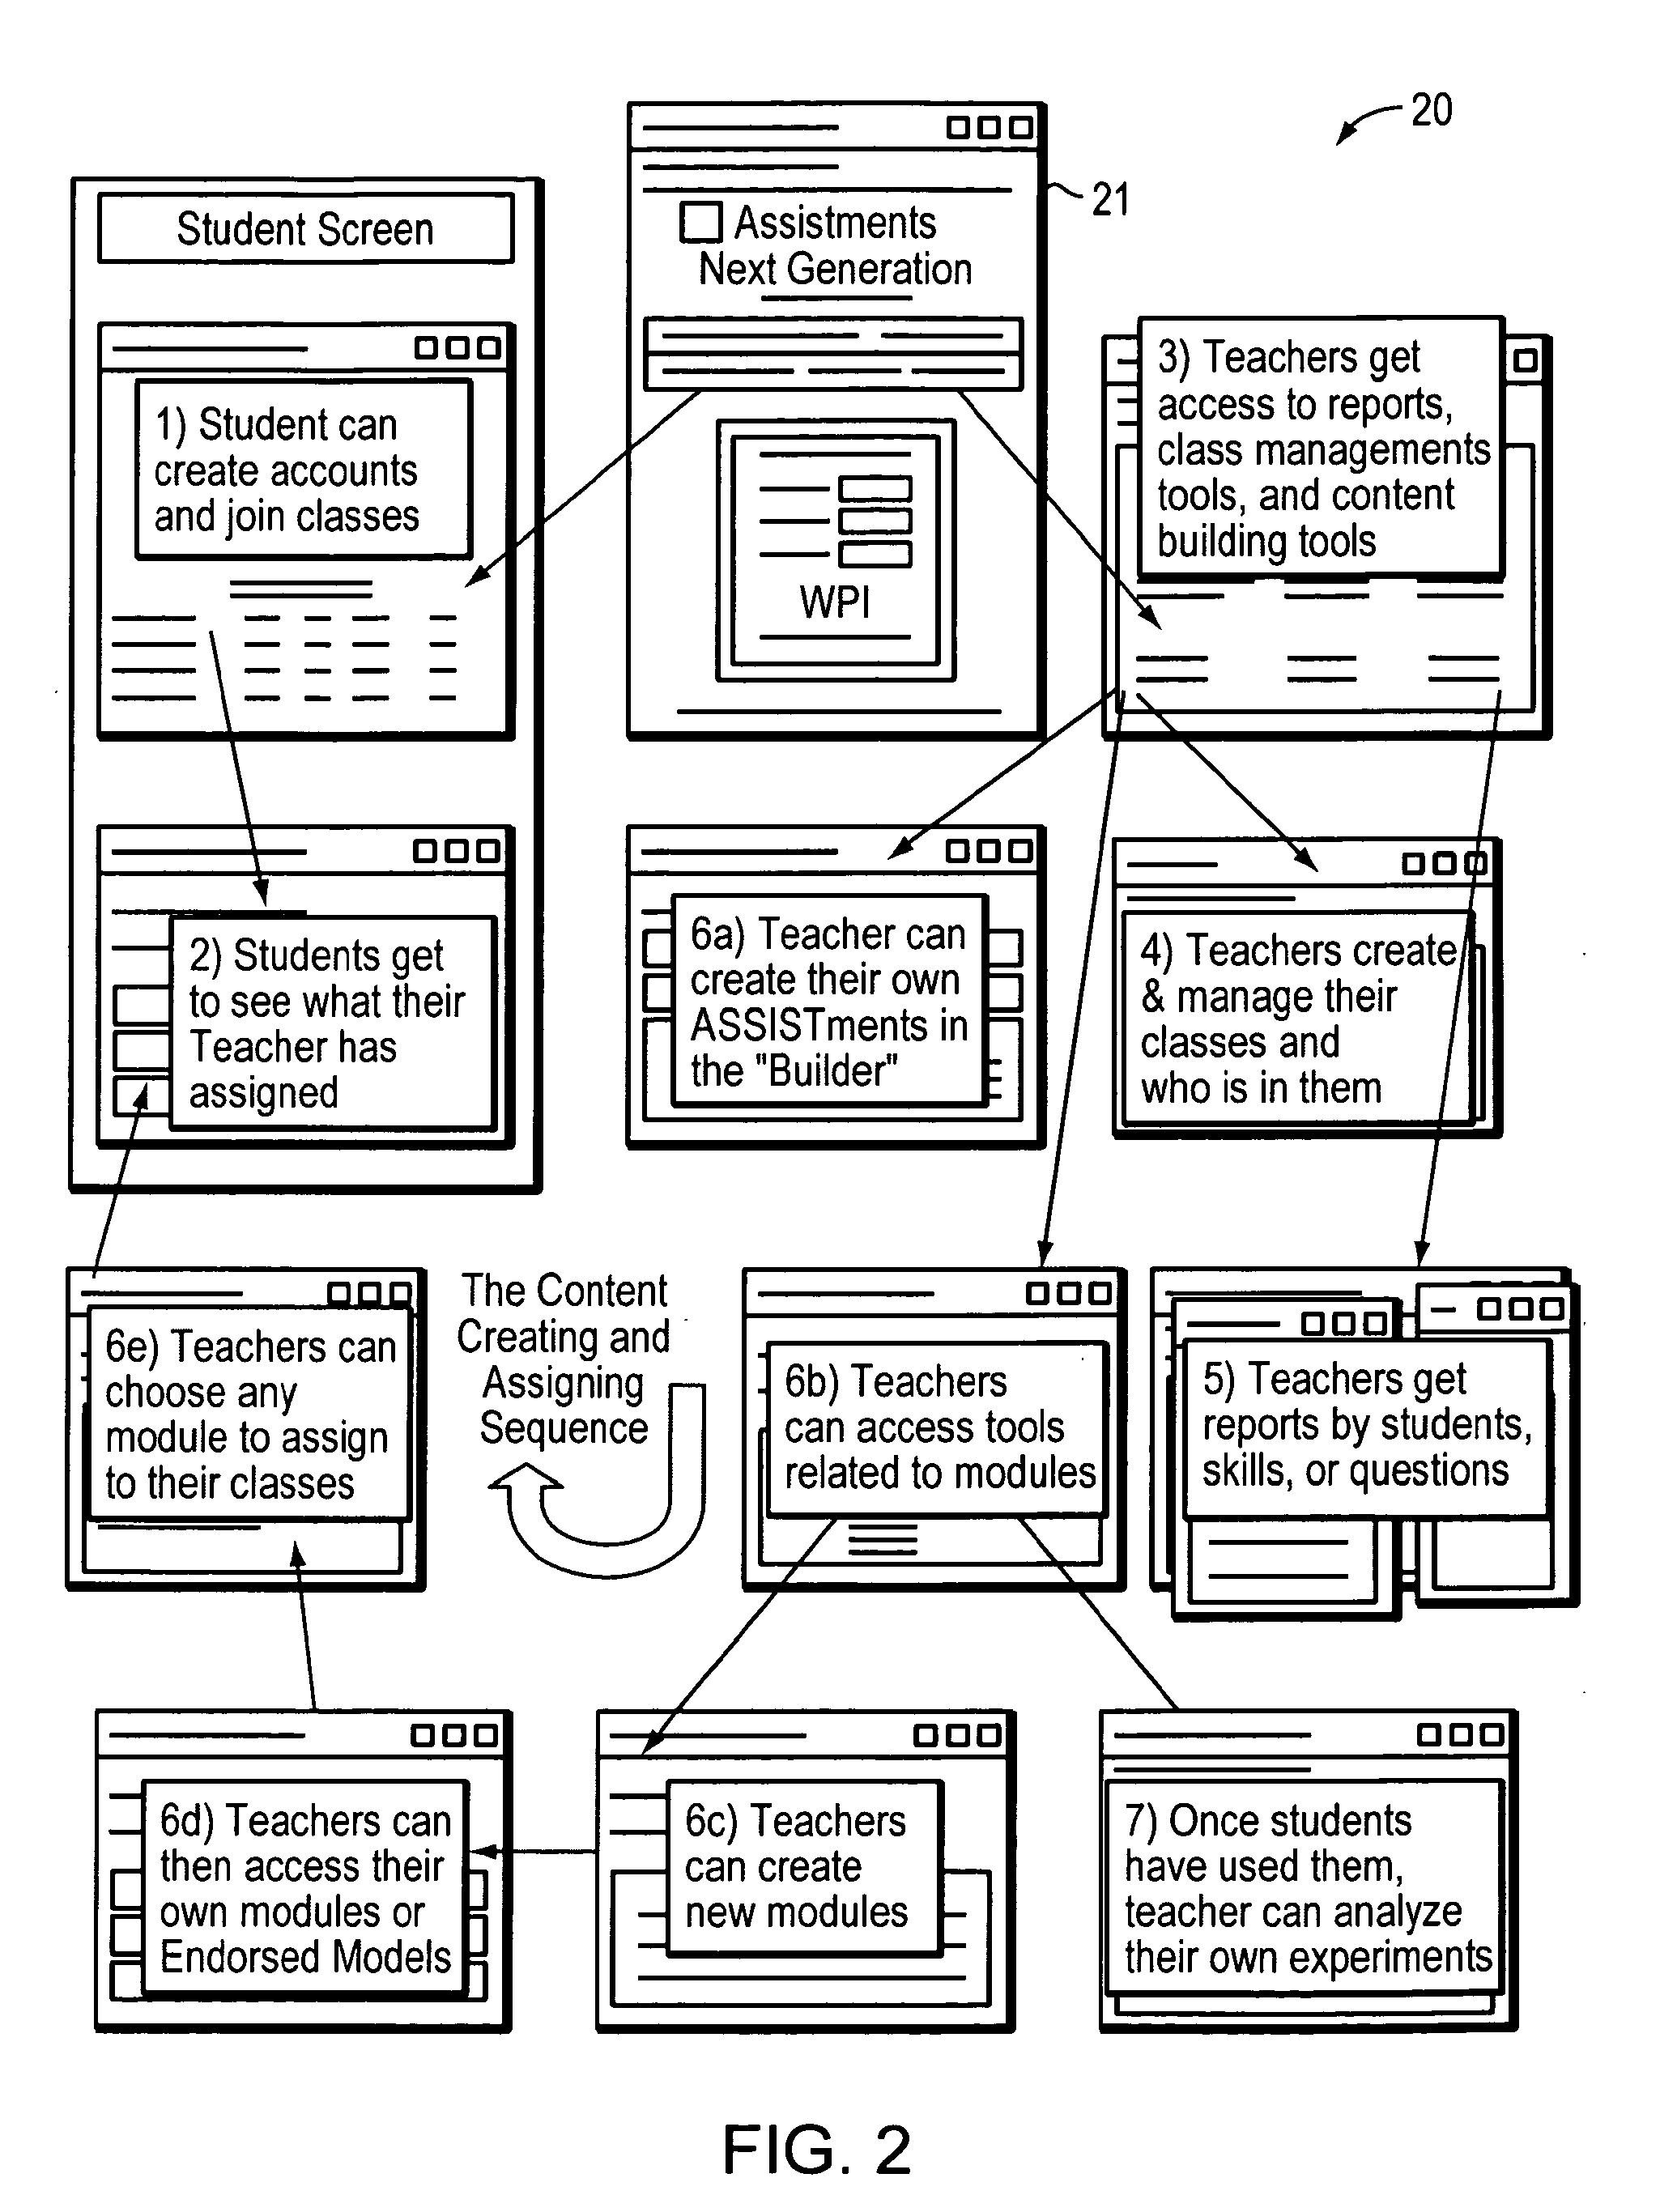 Global Computer Network Self-Tutoring System